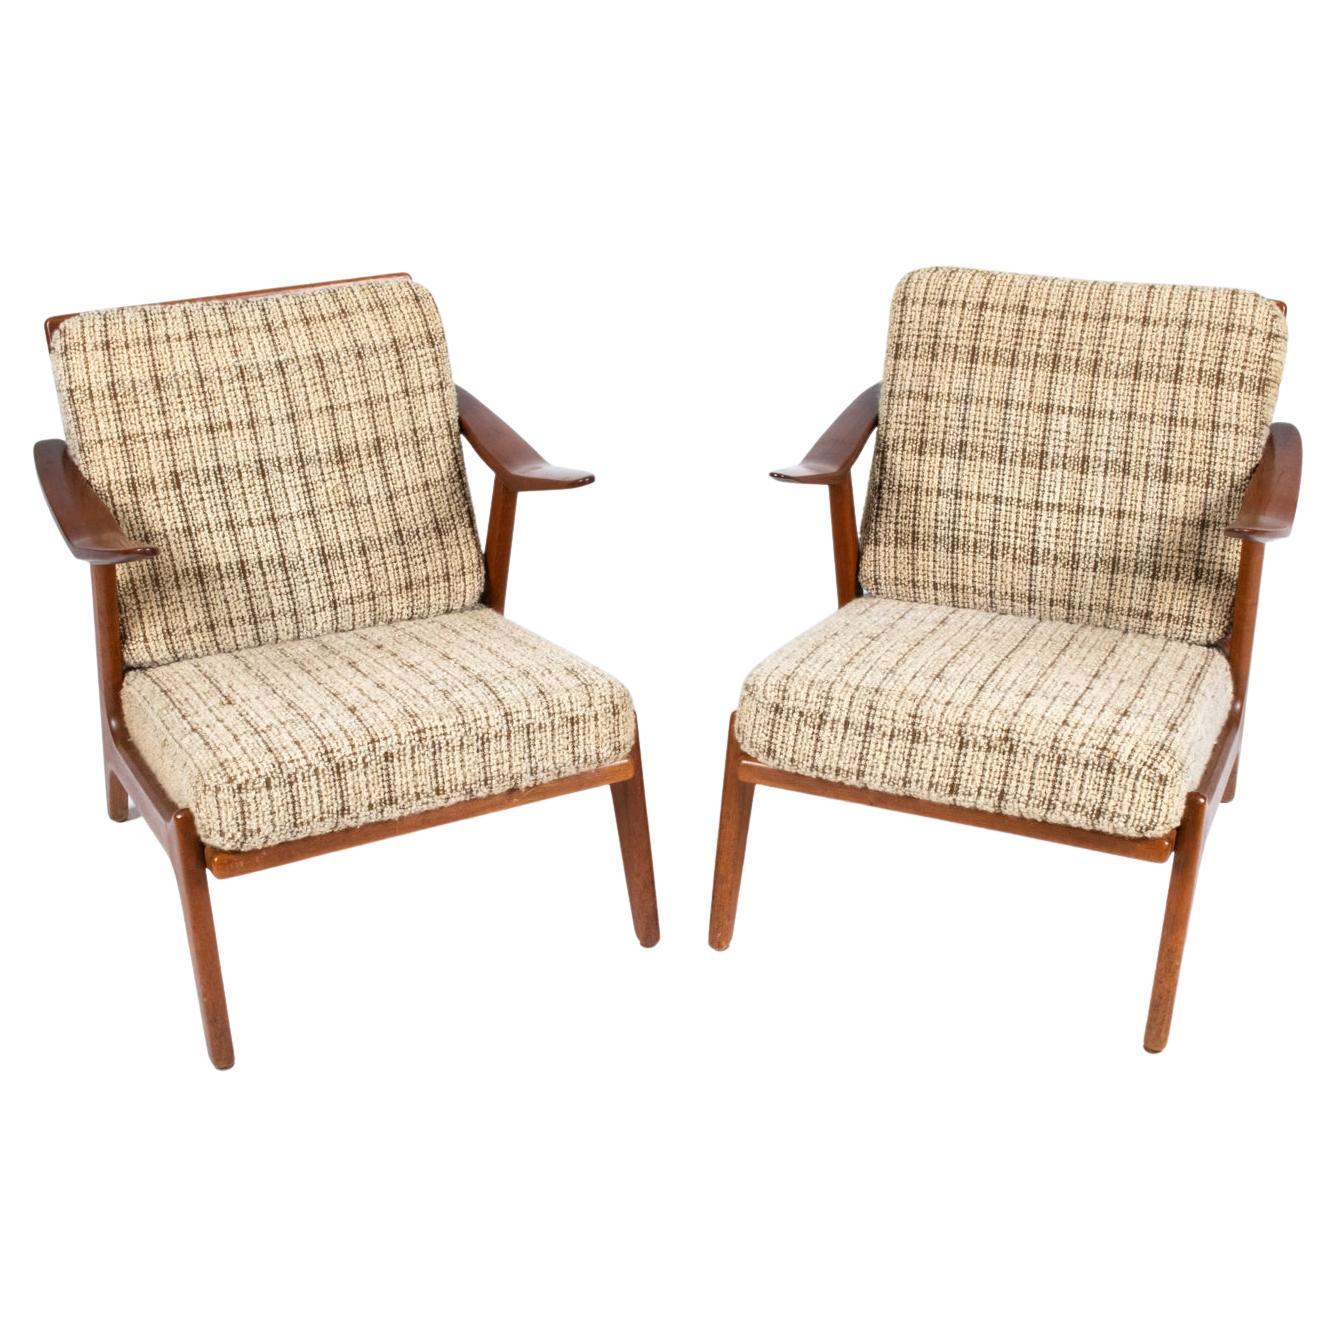 Pair of H. Brockmann-Petersen Teak Lounge Chairs, c. 1960's For Sale